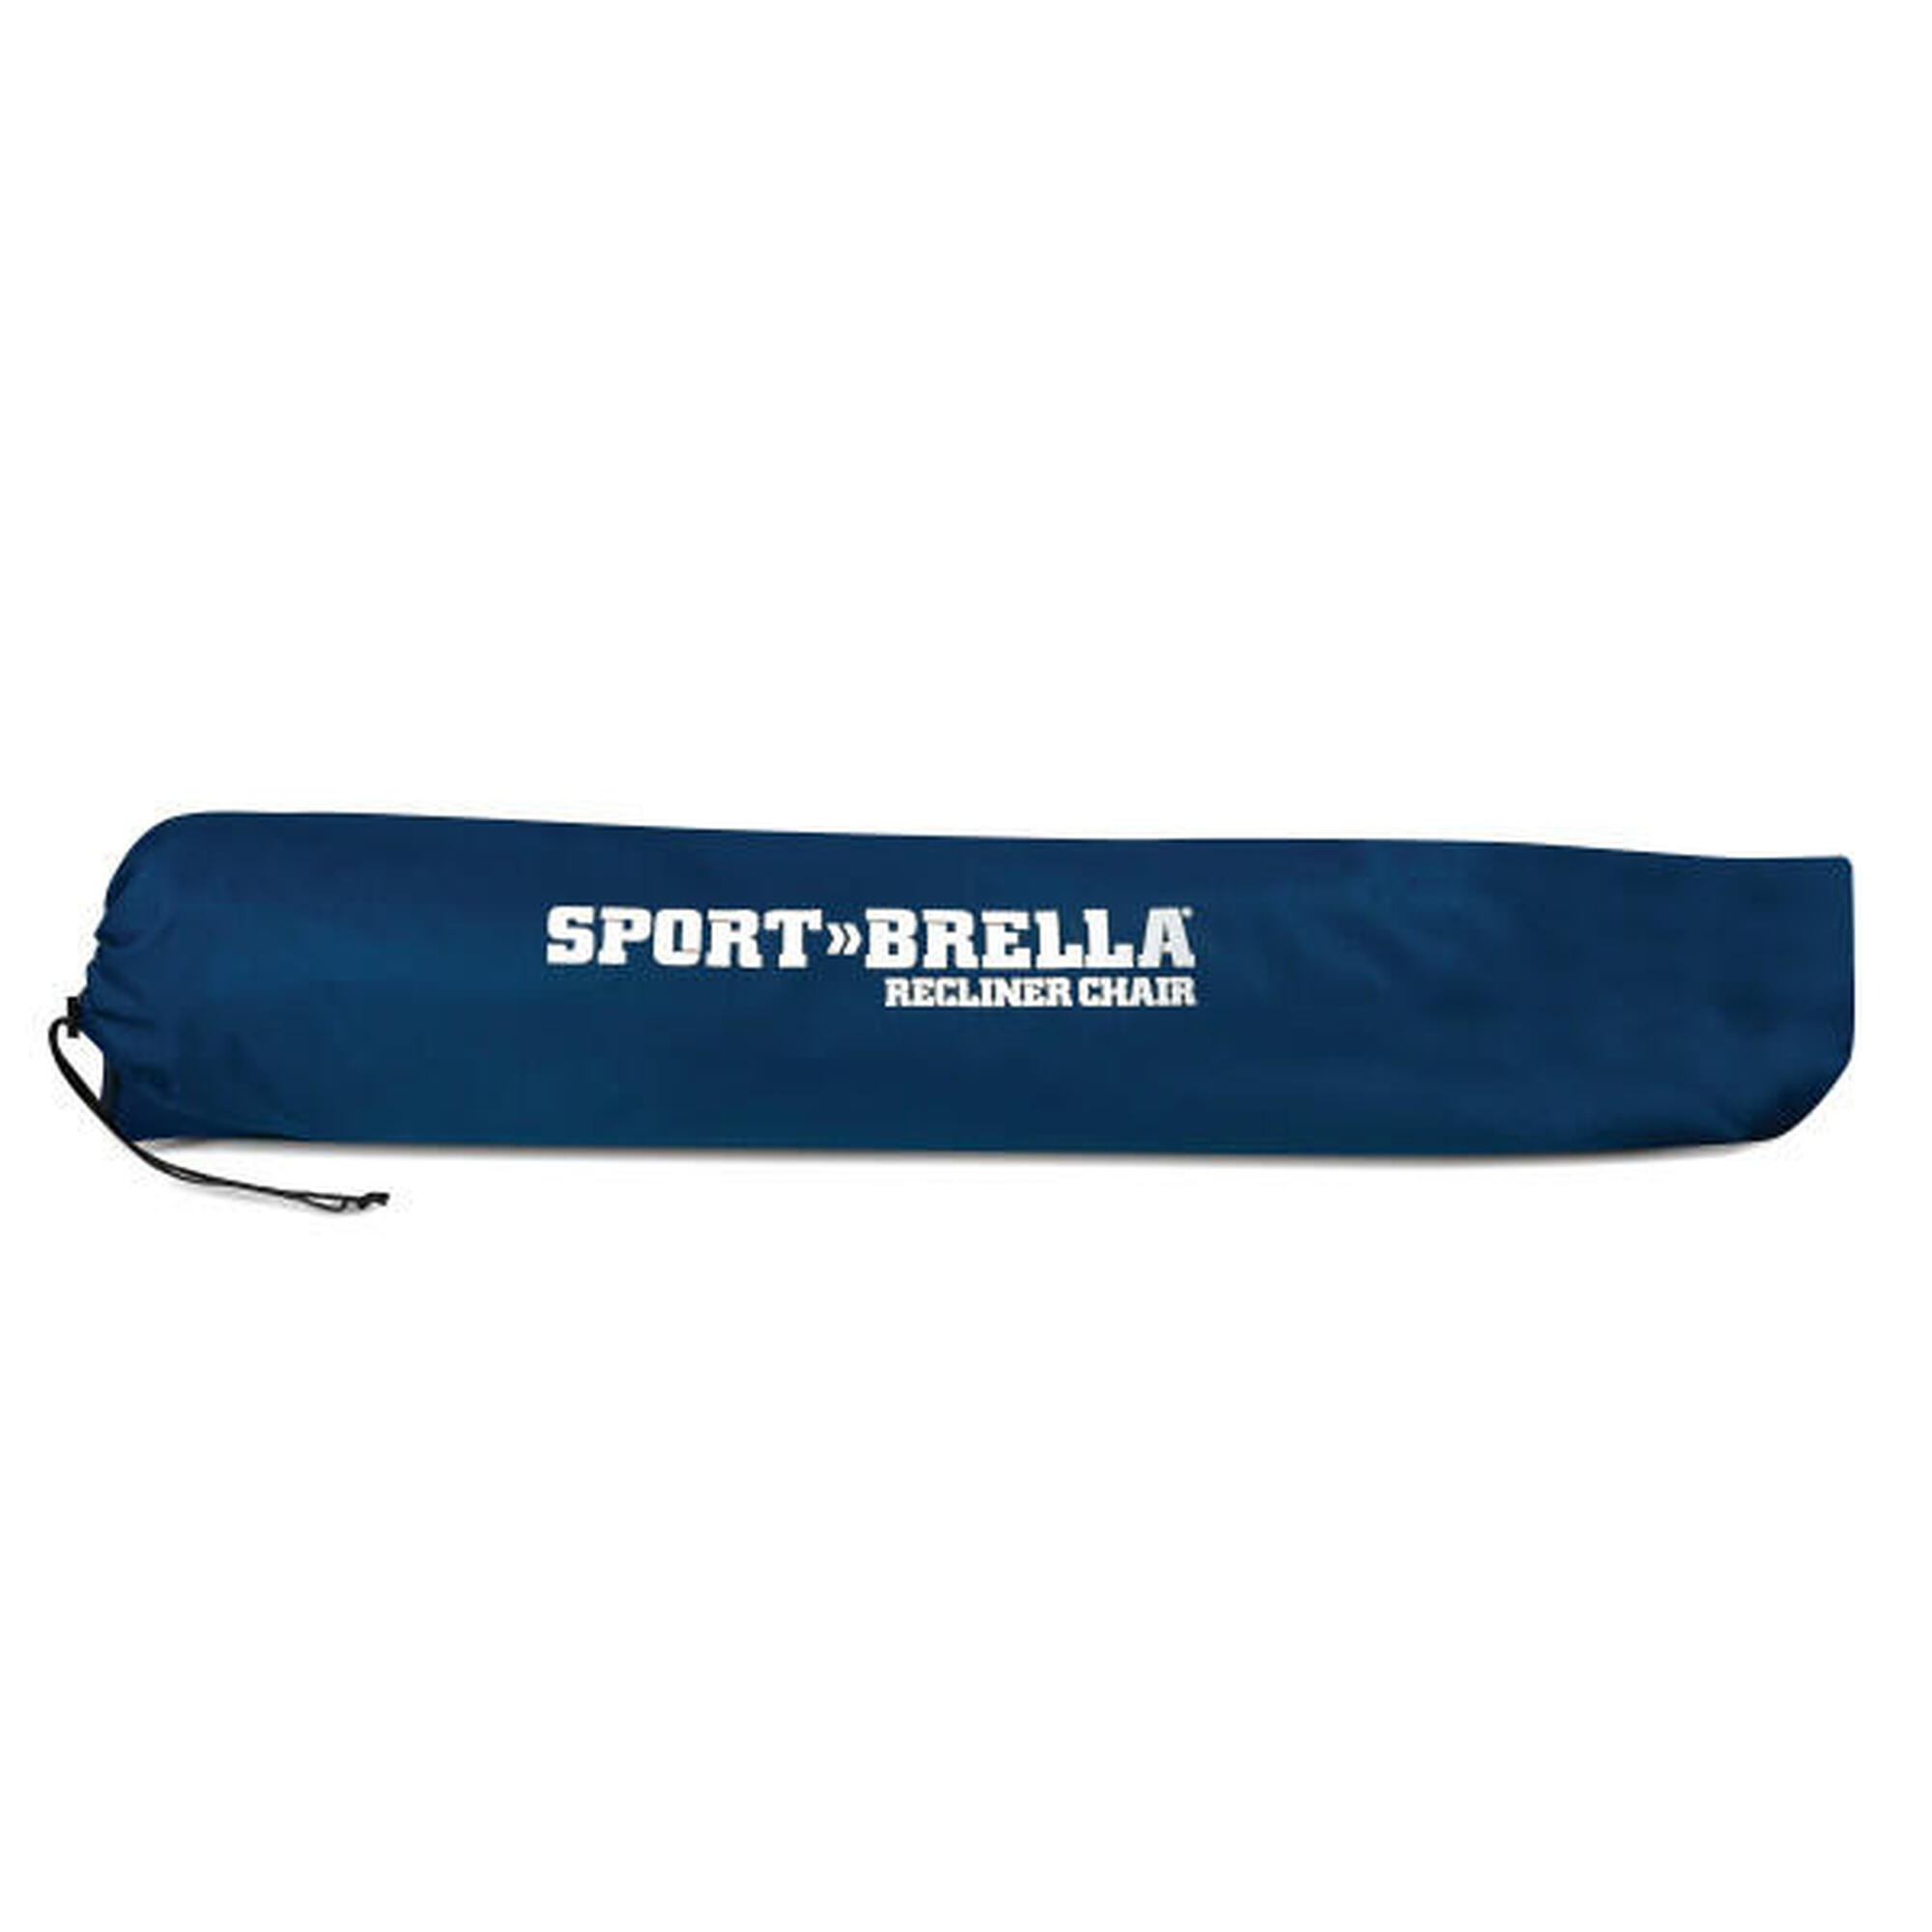 Poltrona Sport-Brella ideal para camping e praia com guarda-sóis integrados